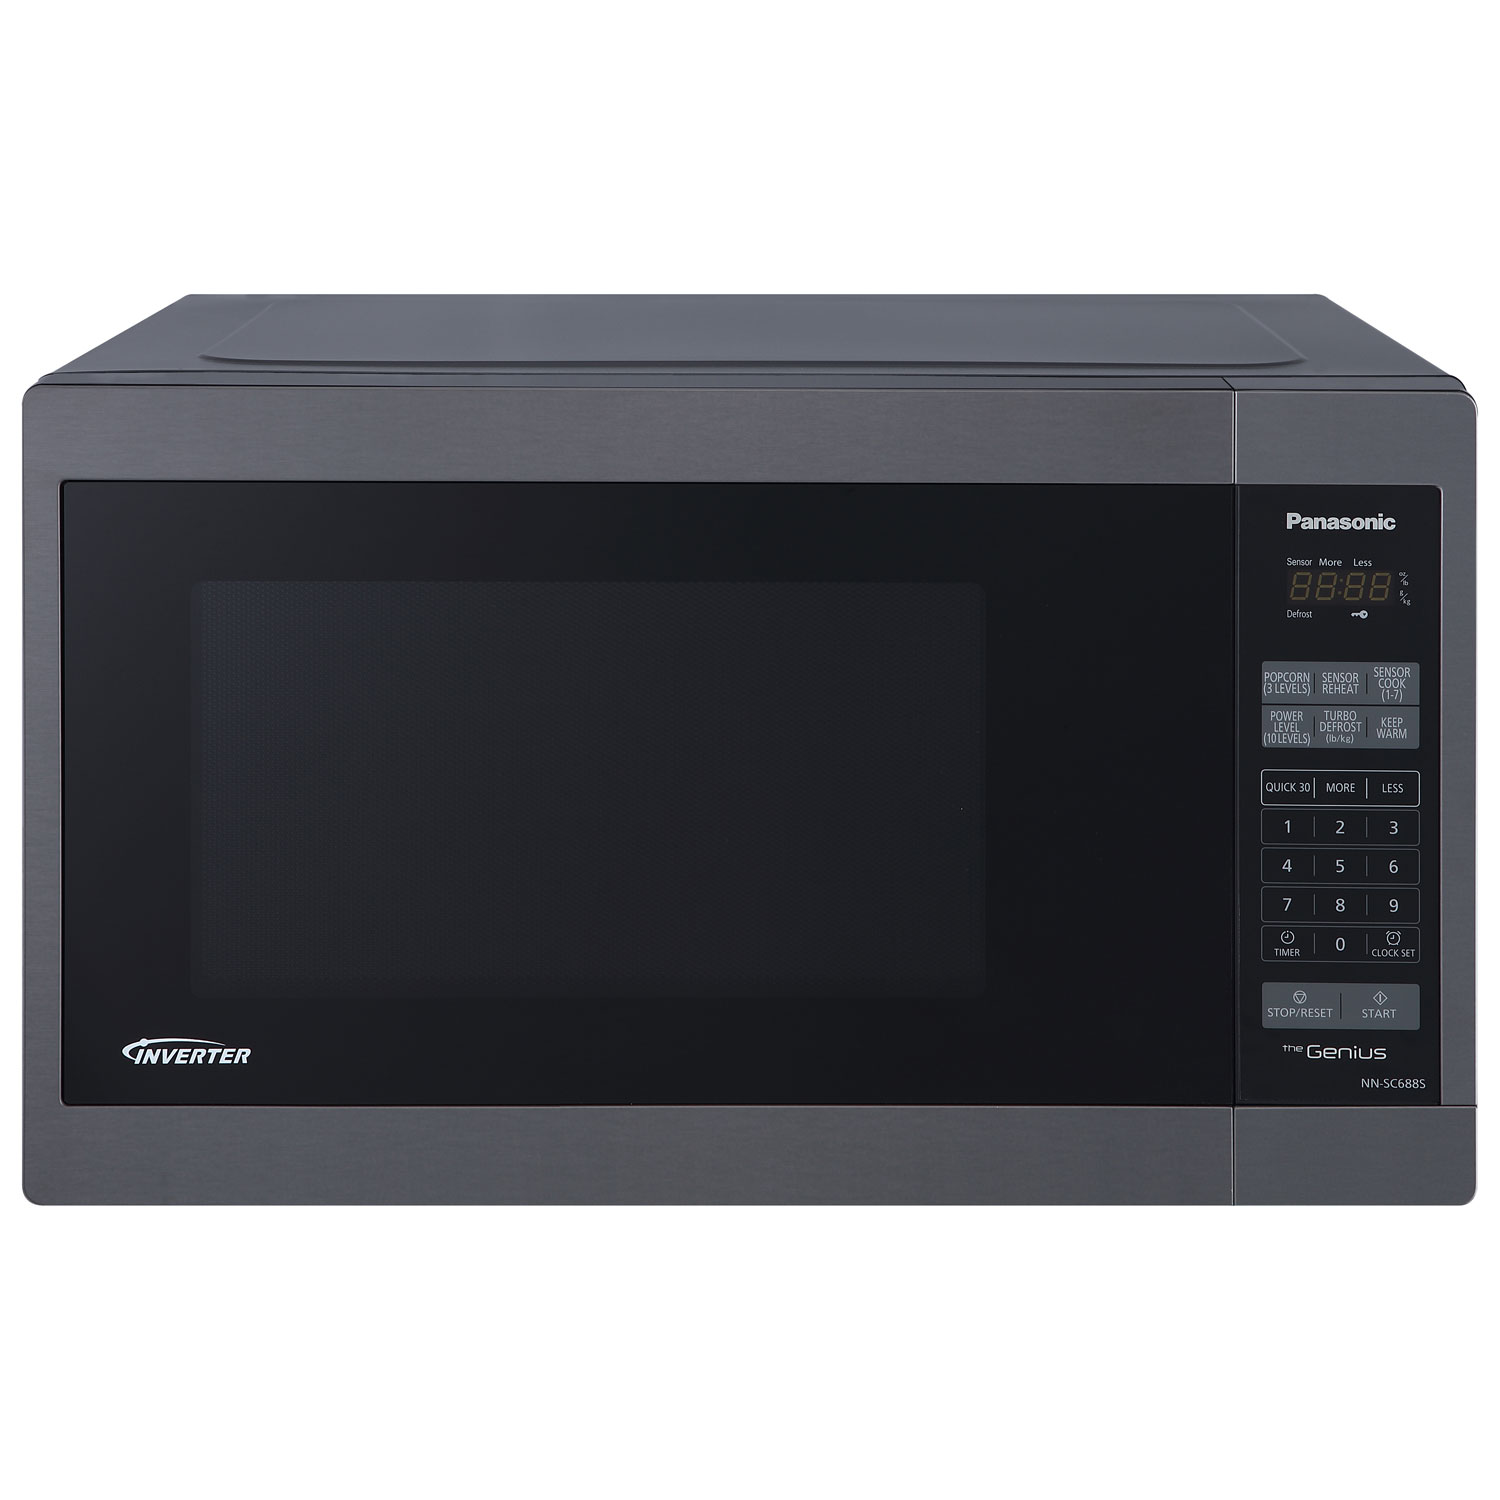 Panasonic Genius 1.3 Cu. Ft. Microwave (NNSC688S) - Black Stainless